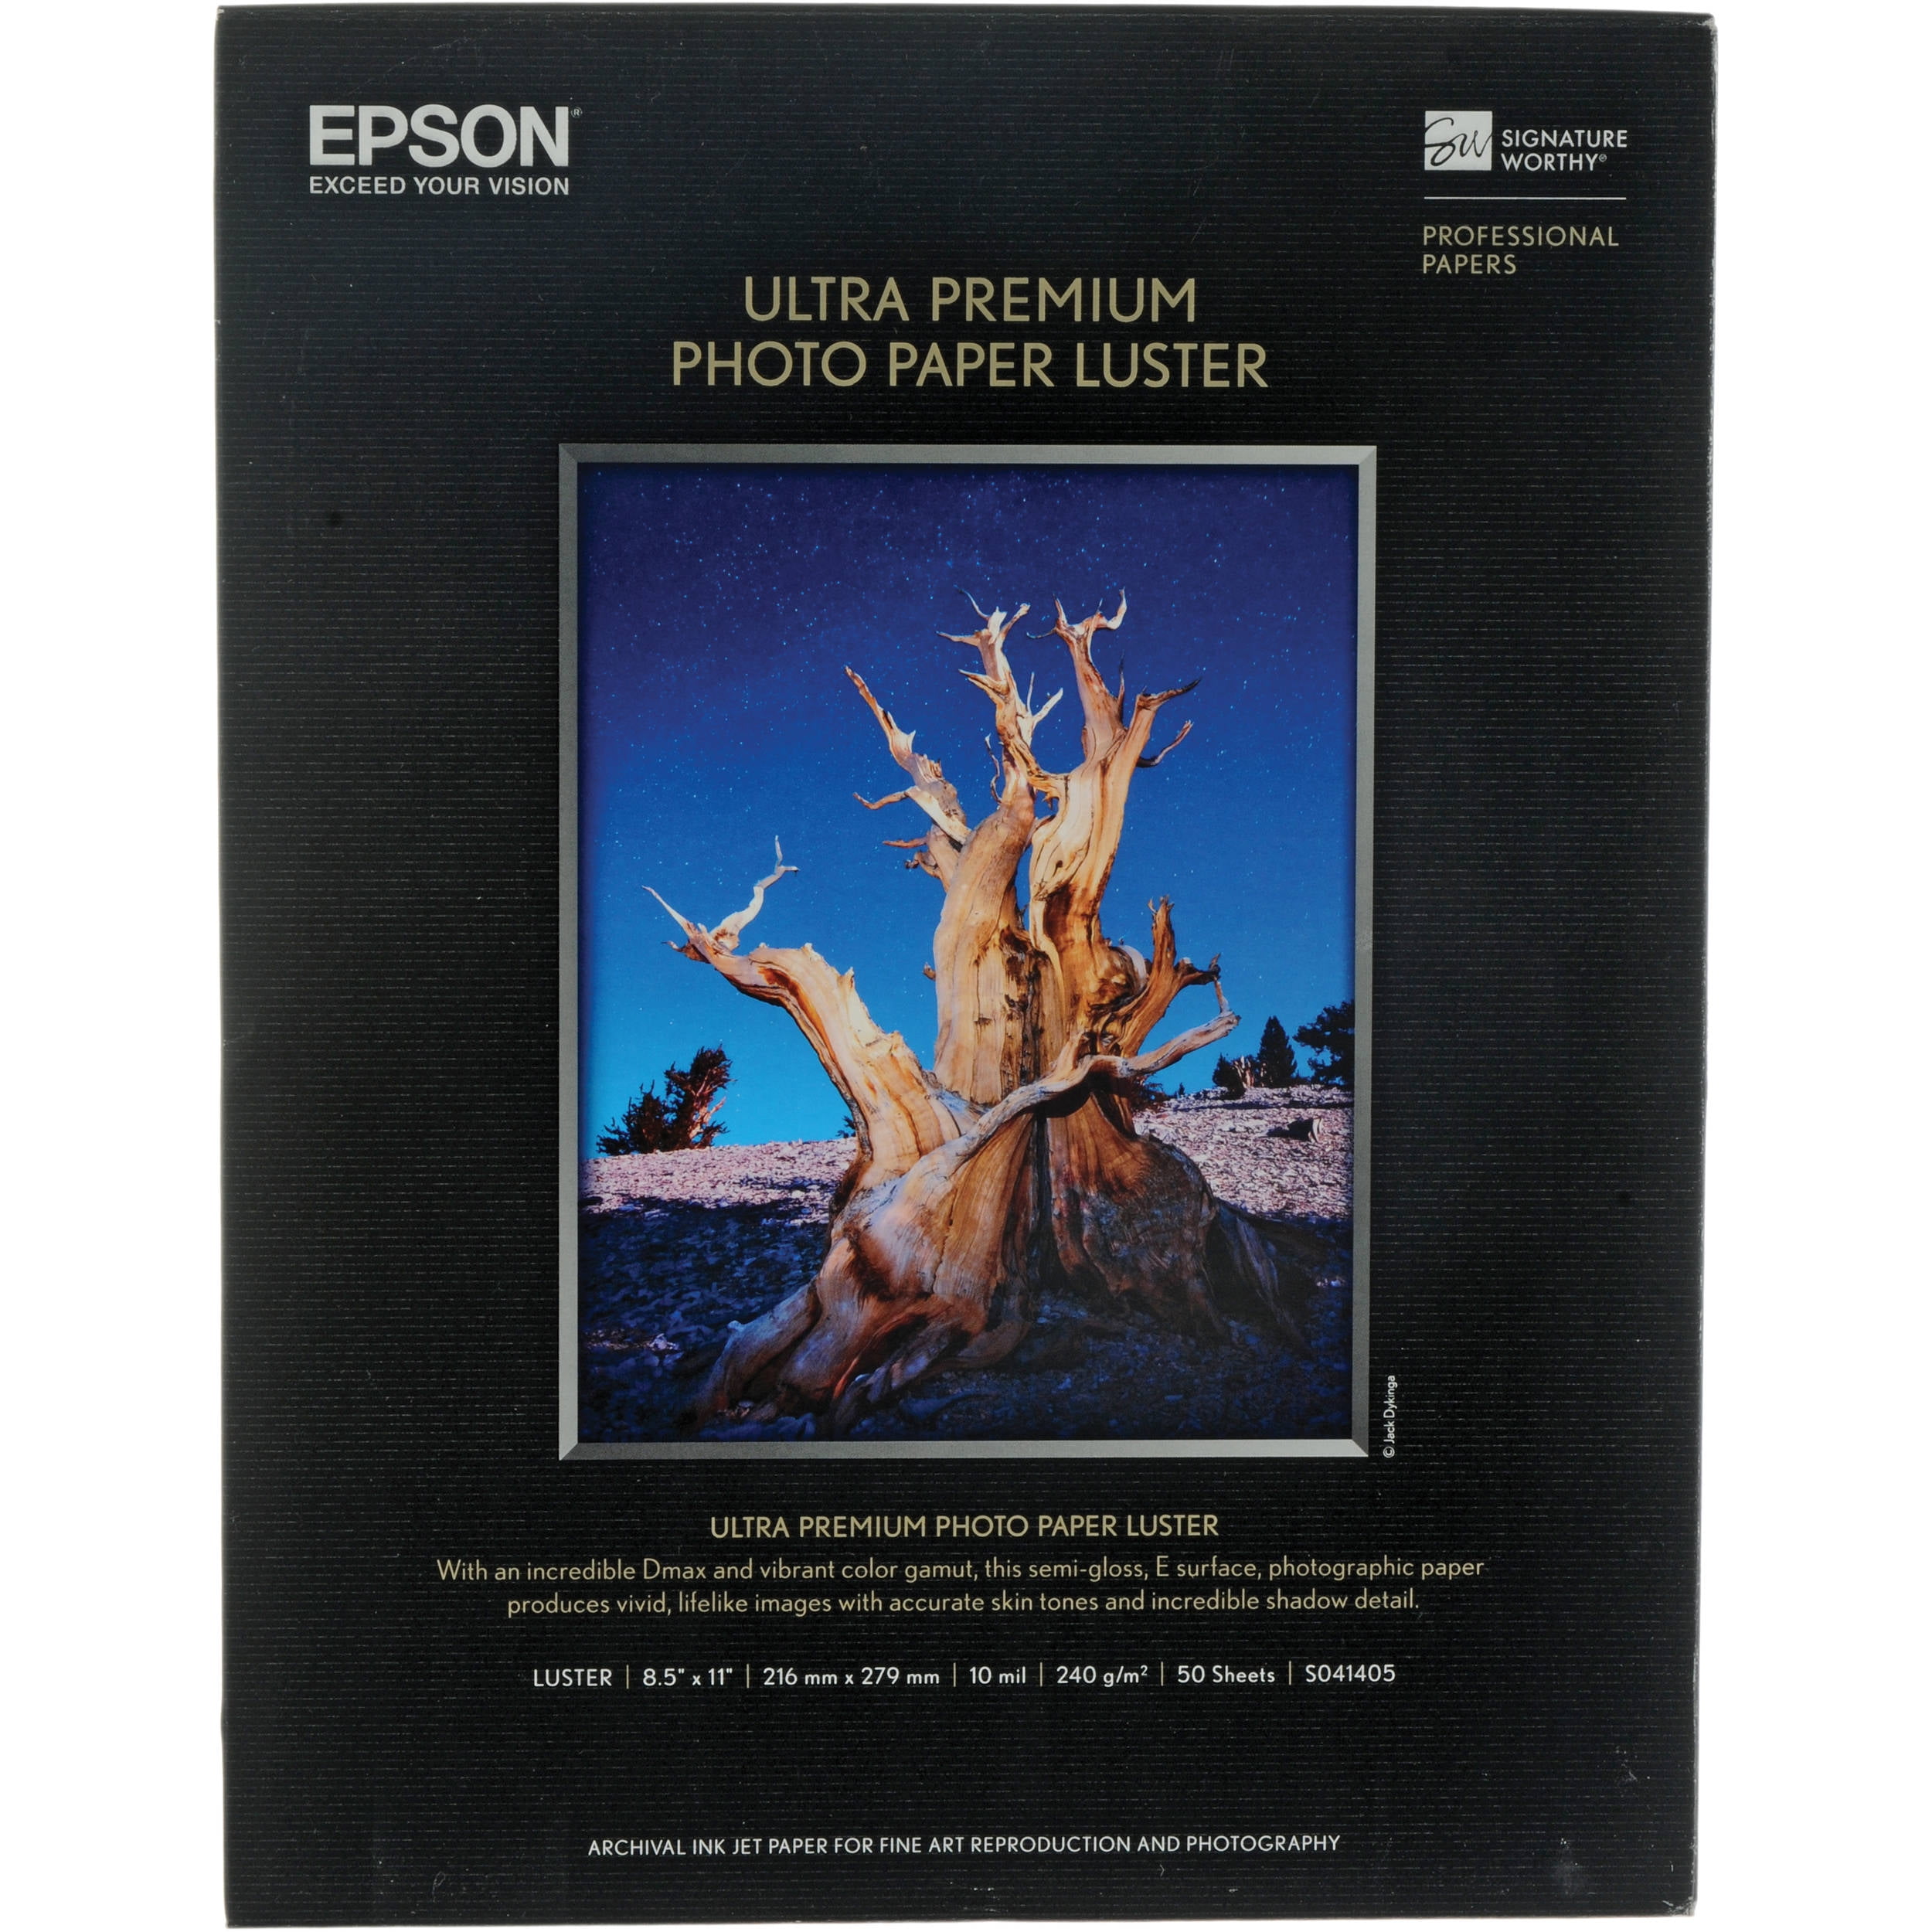 Epson DURABrite Photo Paper, 4 X 6 Glossy, 50 Sheets, S041734